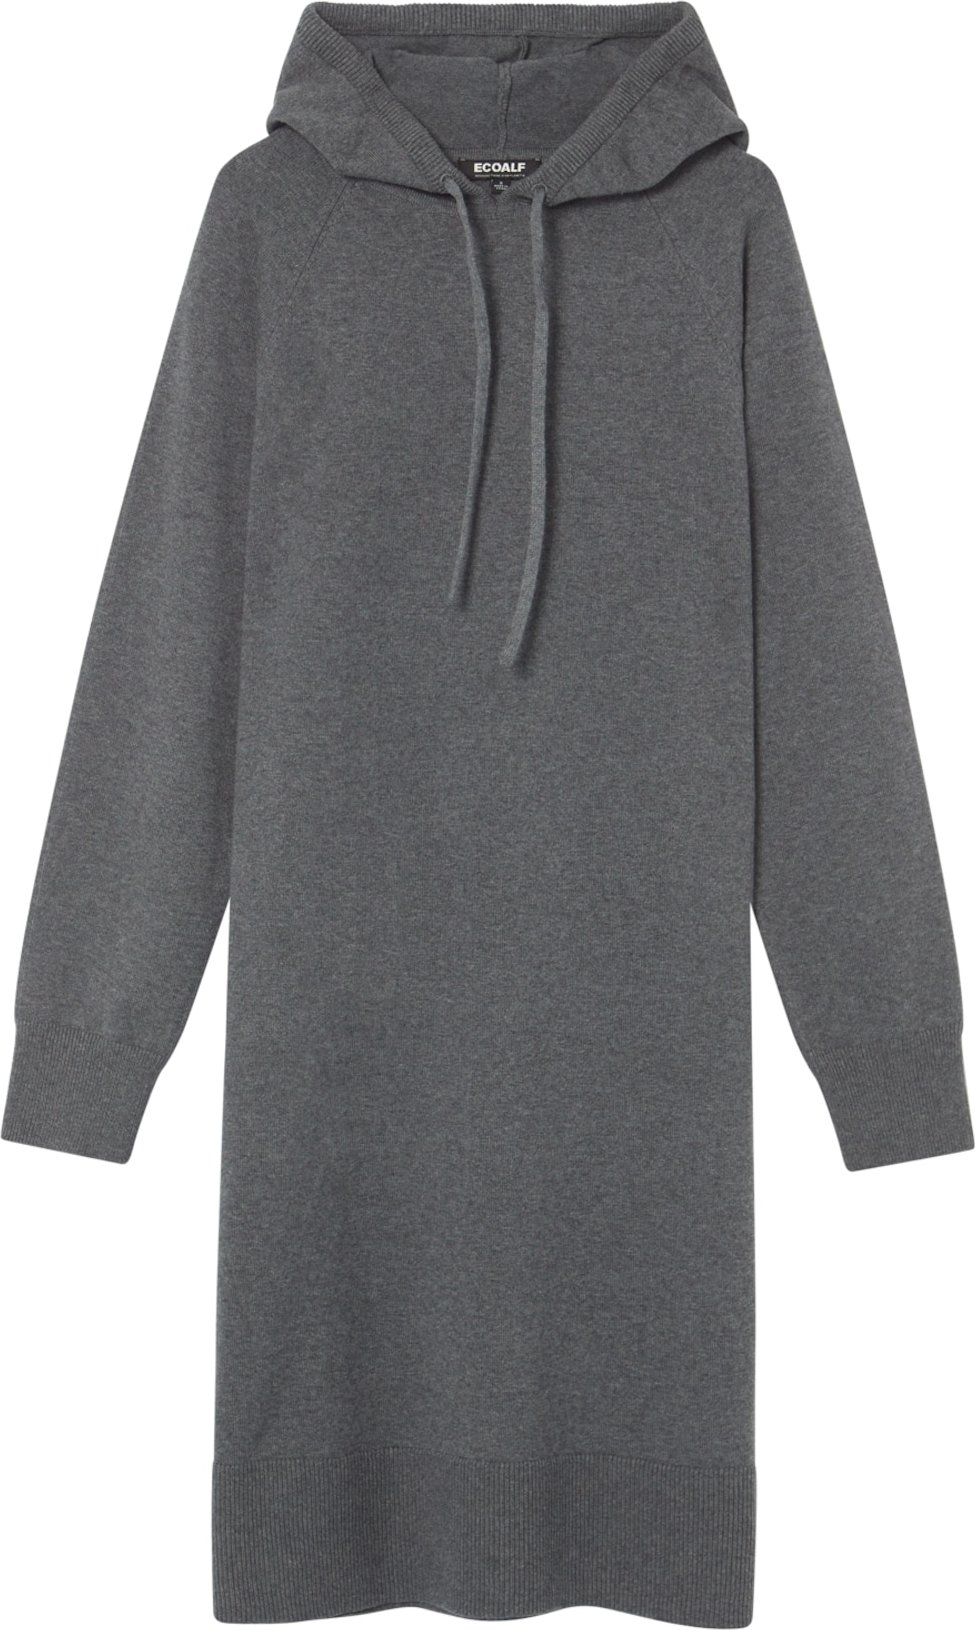 ECOALF Úpletové šaty 'Jude' šedý melír